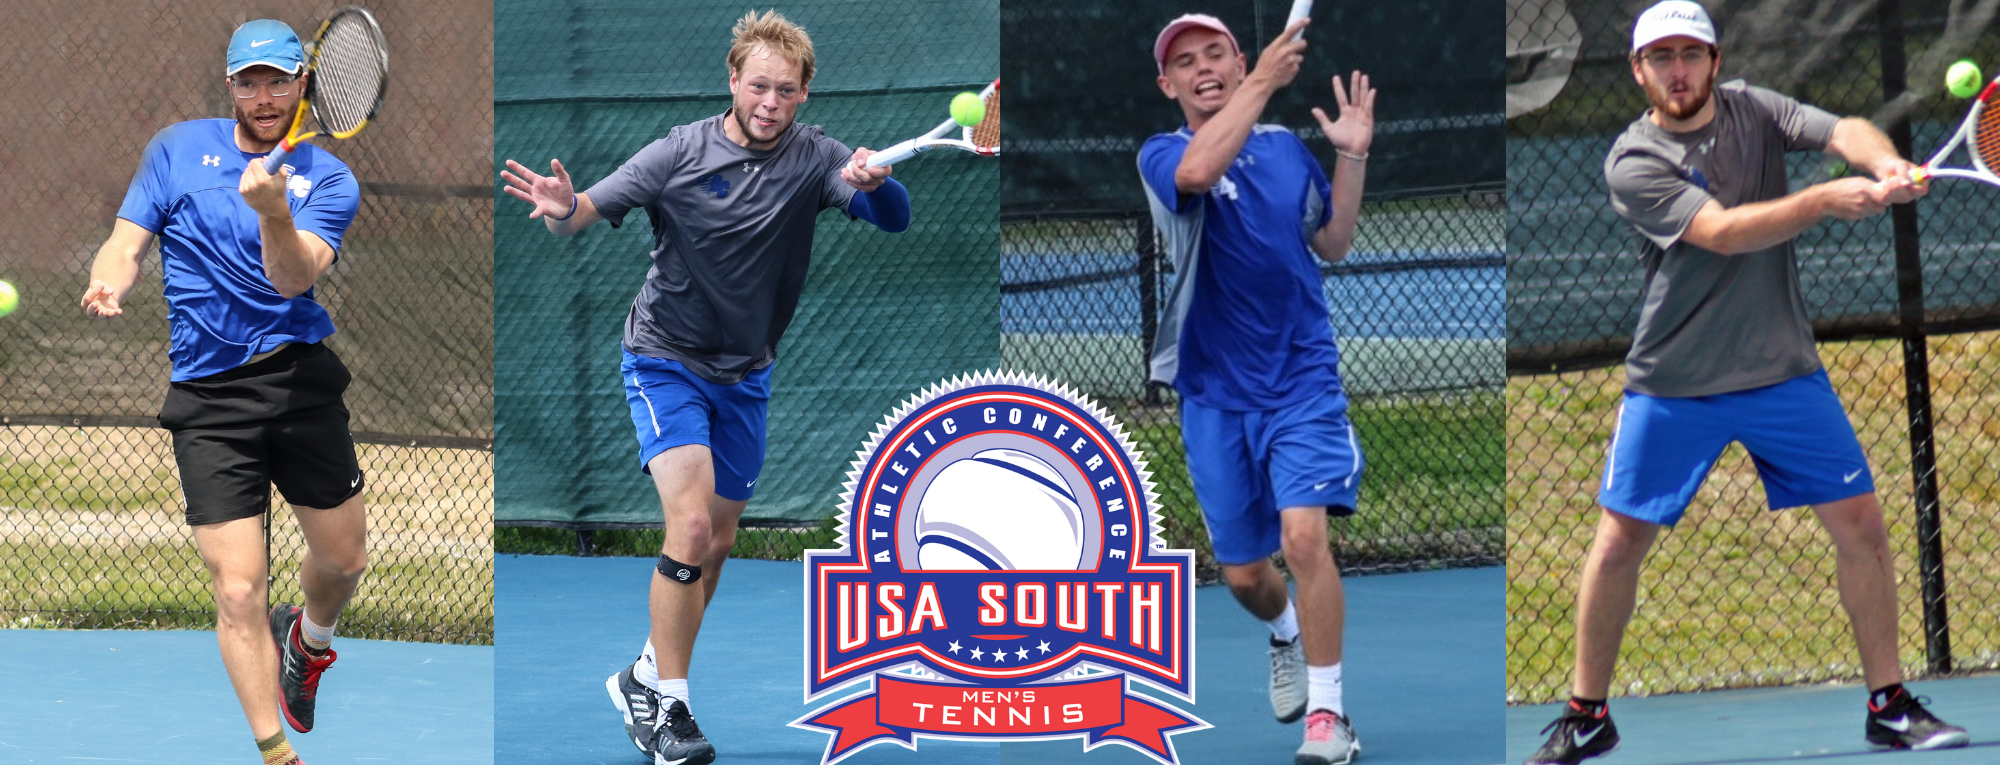 Four Tornados Awarded USA South Men’s Tennis Honors Following Impressive Season